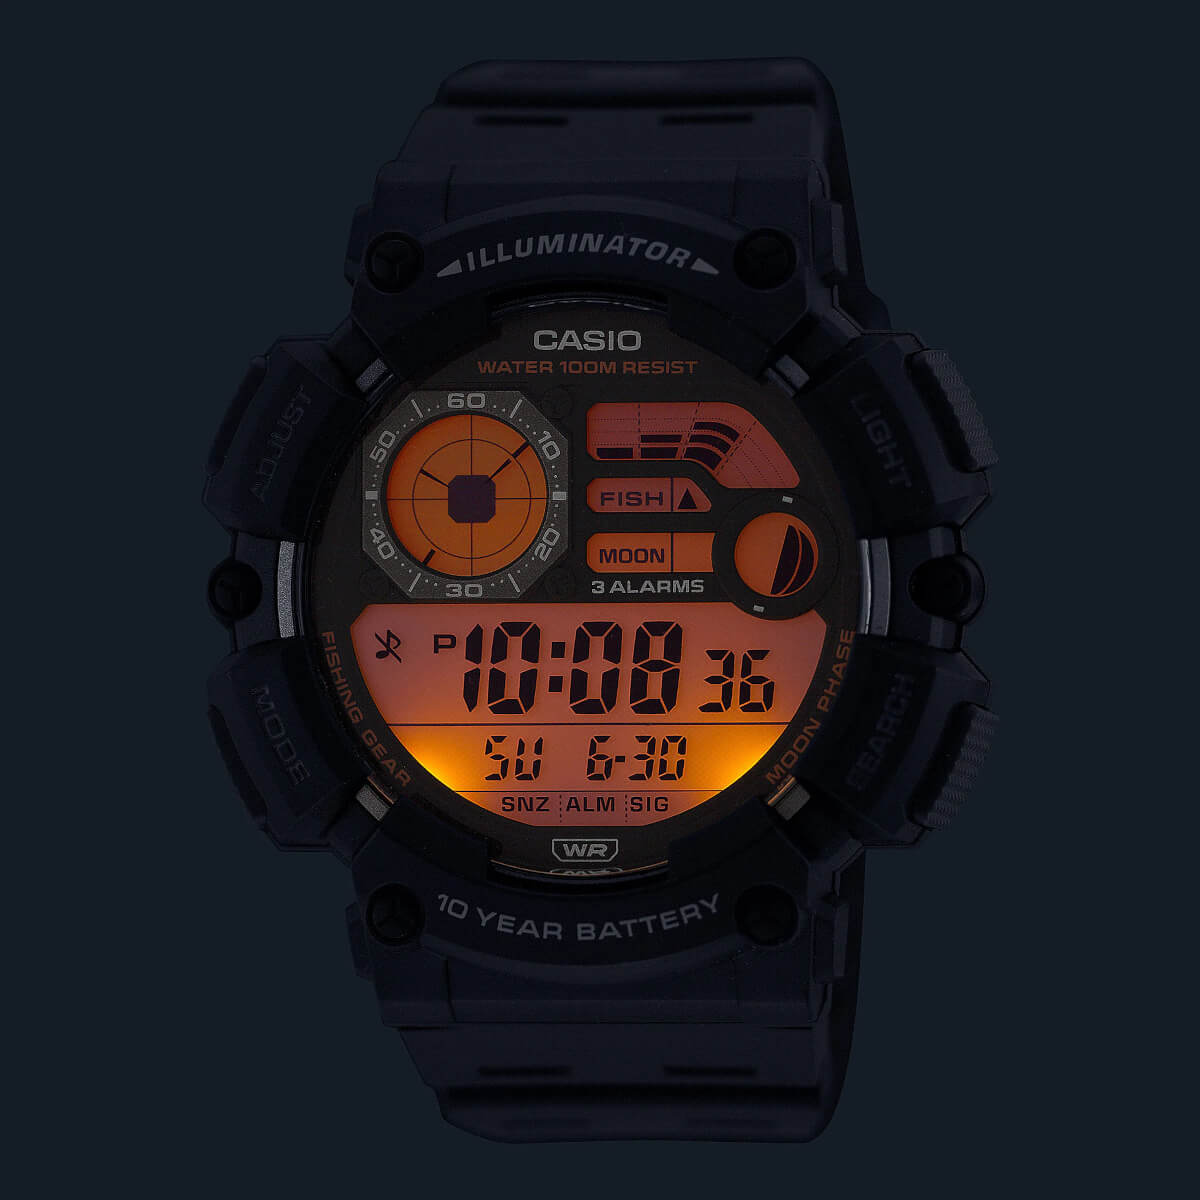 Casio updates Fishing Gear line with WS-1500H digital watch: 10